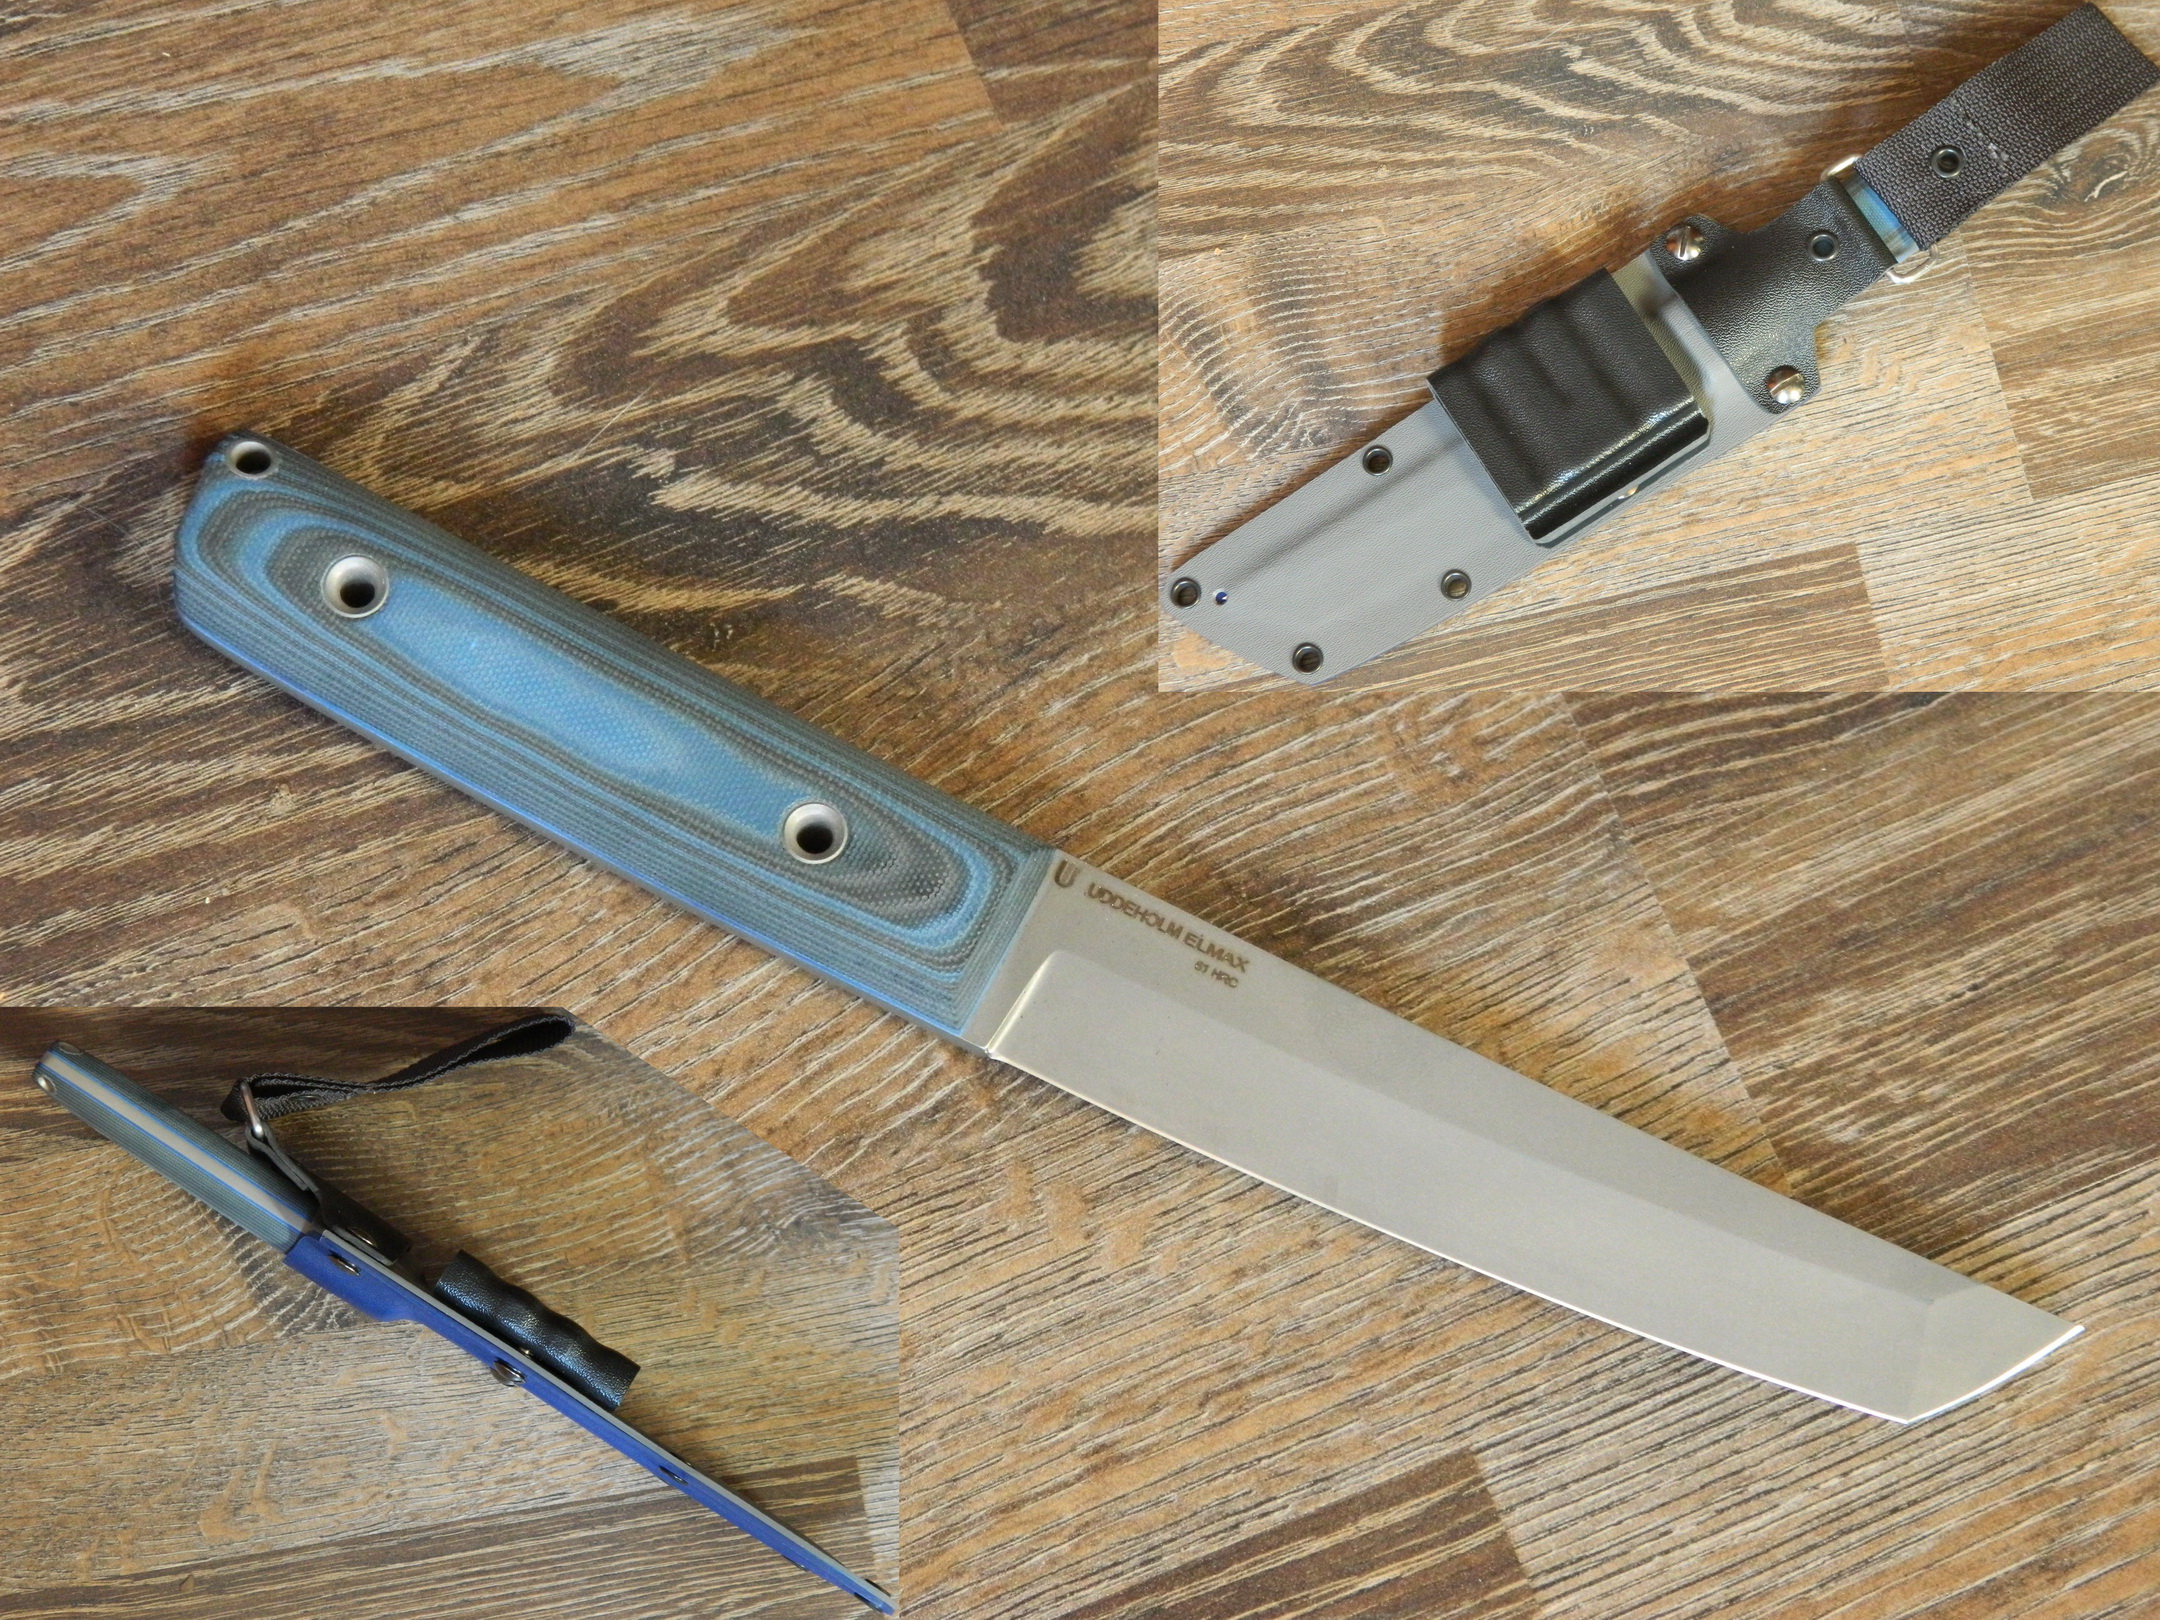 Нож working Knife Elmax. Ножи от мастерской "WORKINGKNIFE" wk3. Нож Elmax танто. Воркинг кнайф танто.